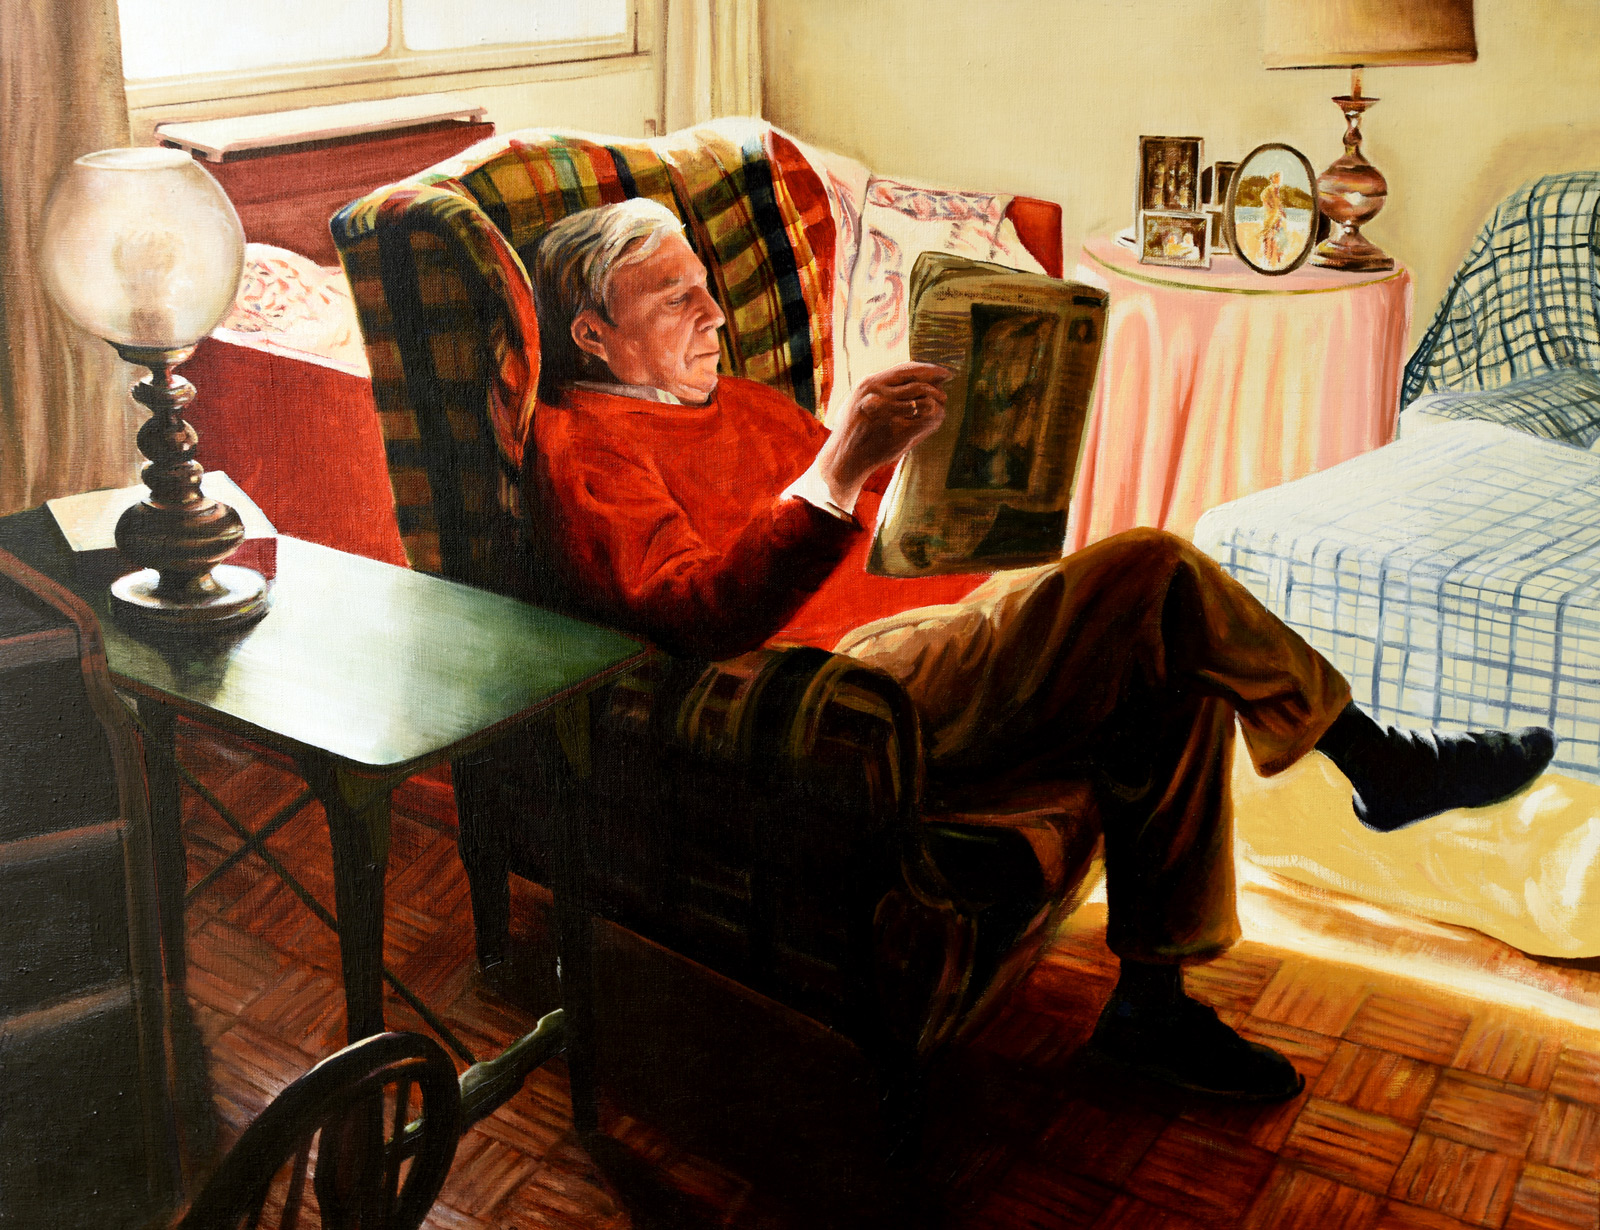 Mi padre leyendo el periódico - Óleo sobre lienzo - 81x65 cm - 2009 - Matute Art